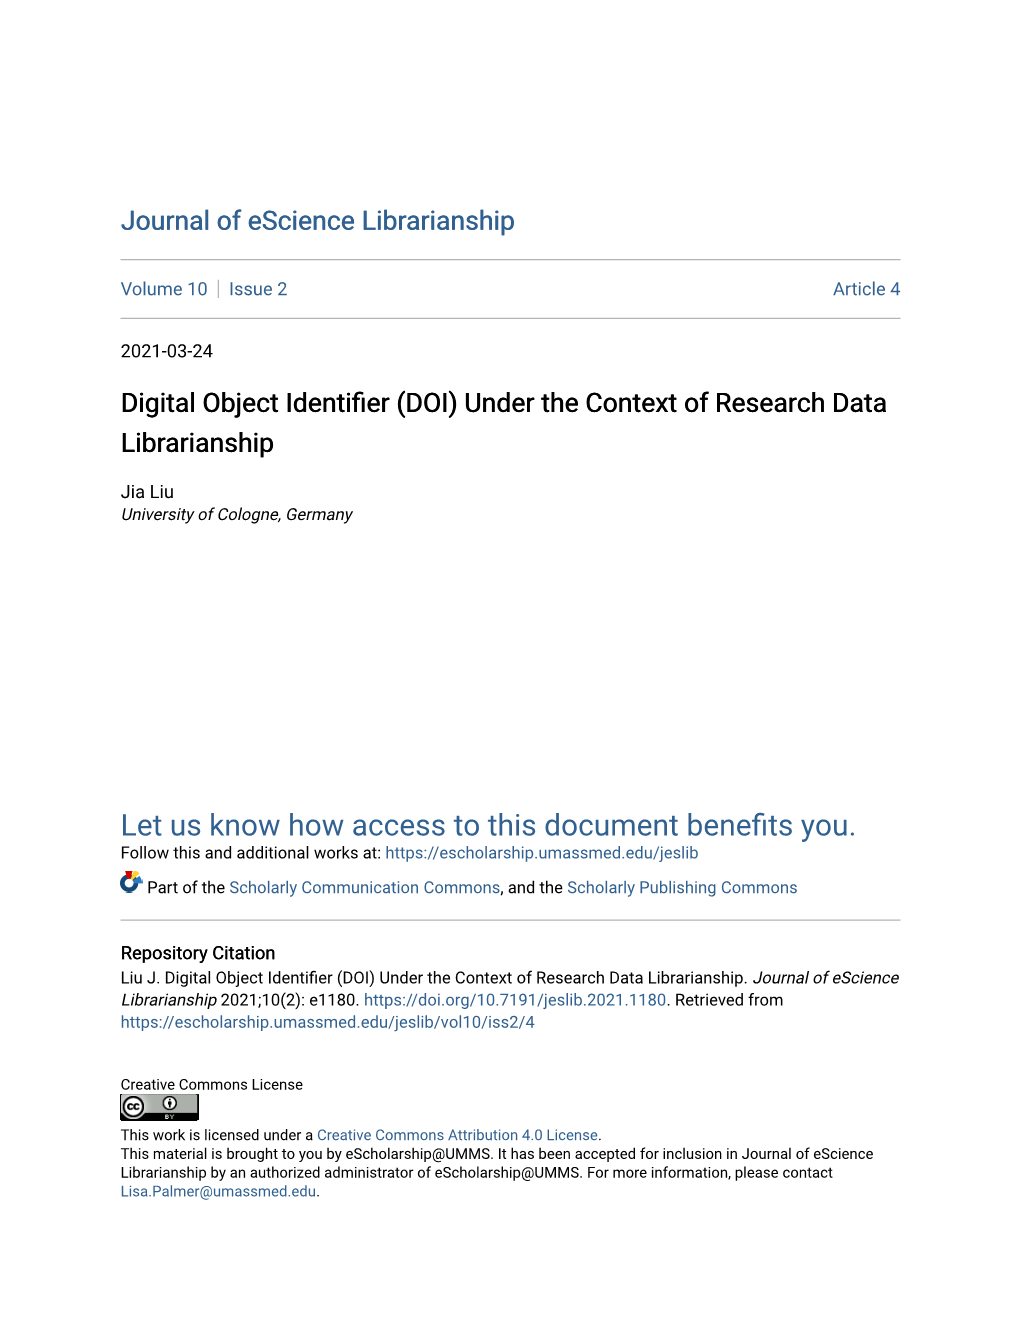 Digital Object Identifier (DOI) Under the Context of Research Data Librarianship